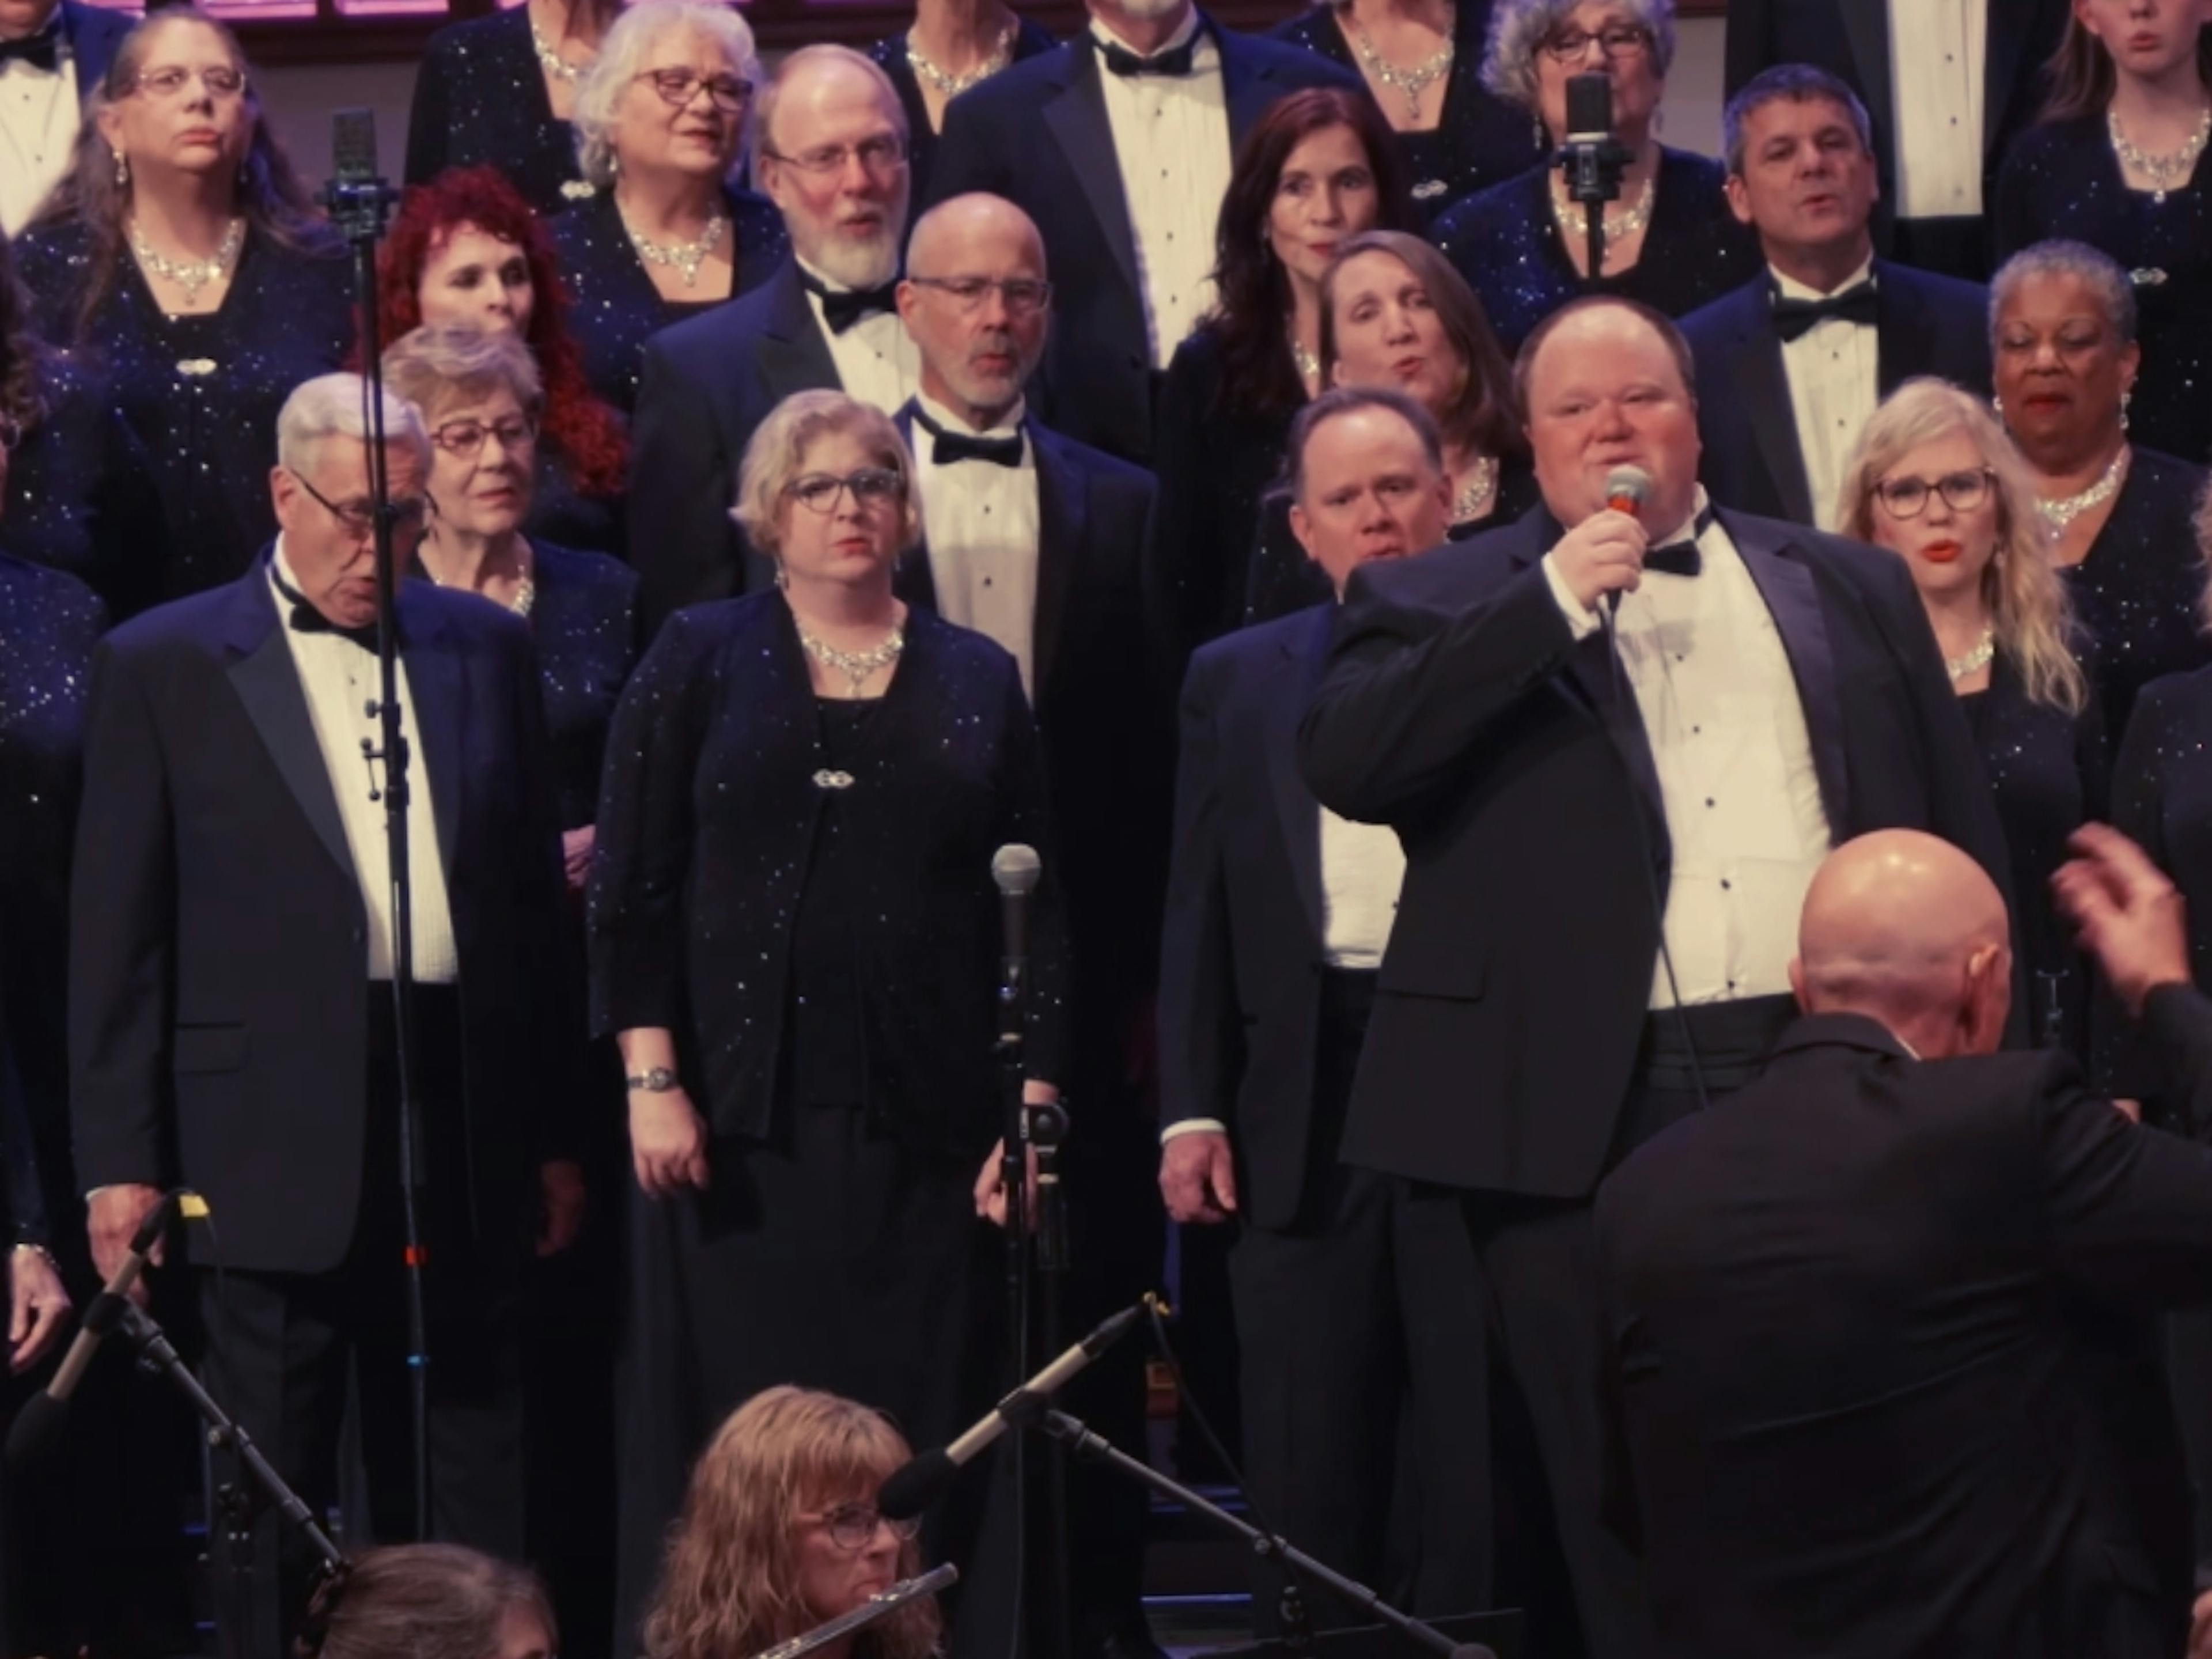 choir performing on stage